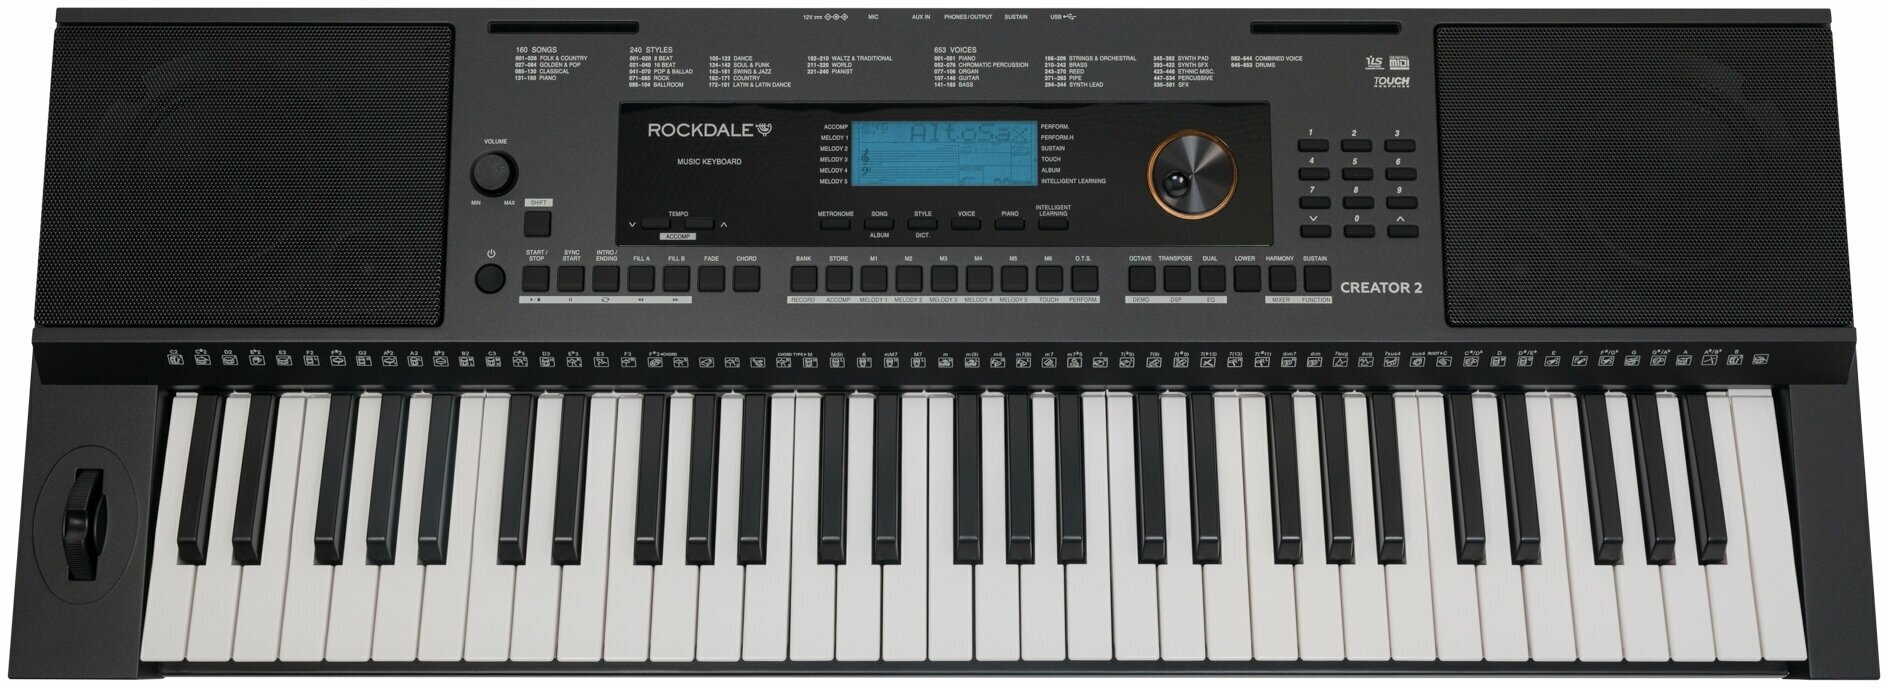 ROCKDALE Creator 2 синтезатор, 61 клавиша